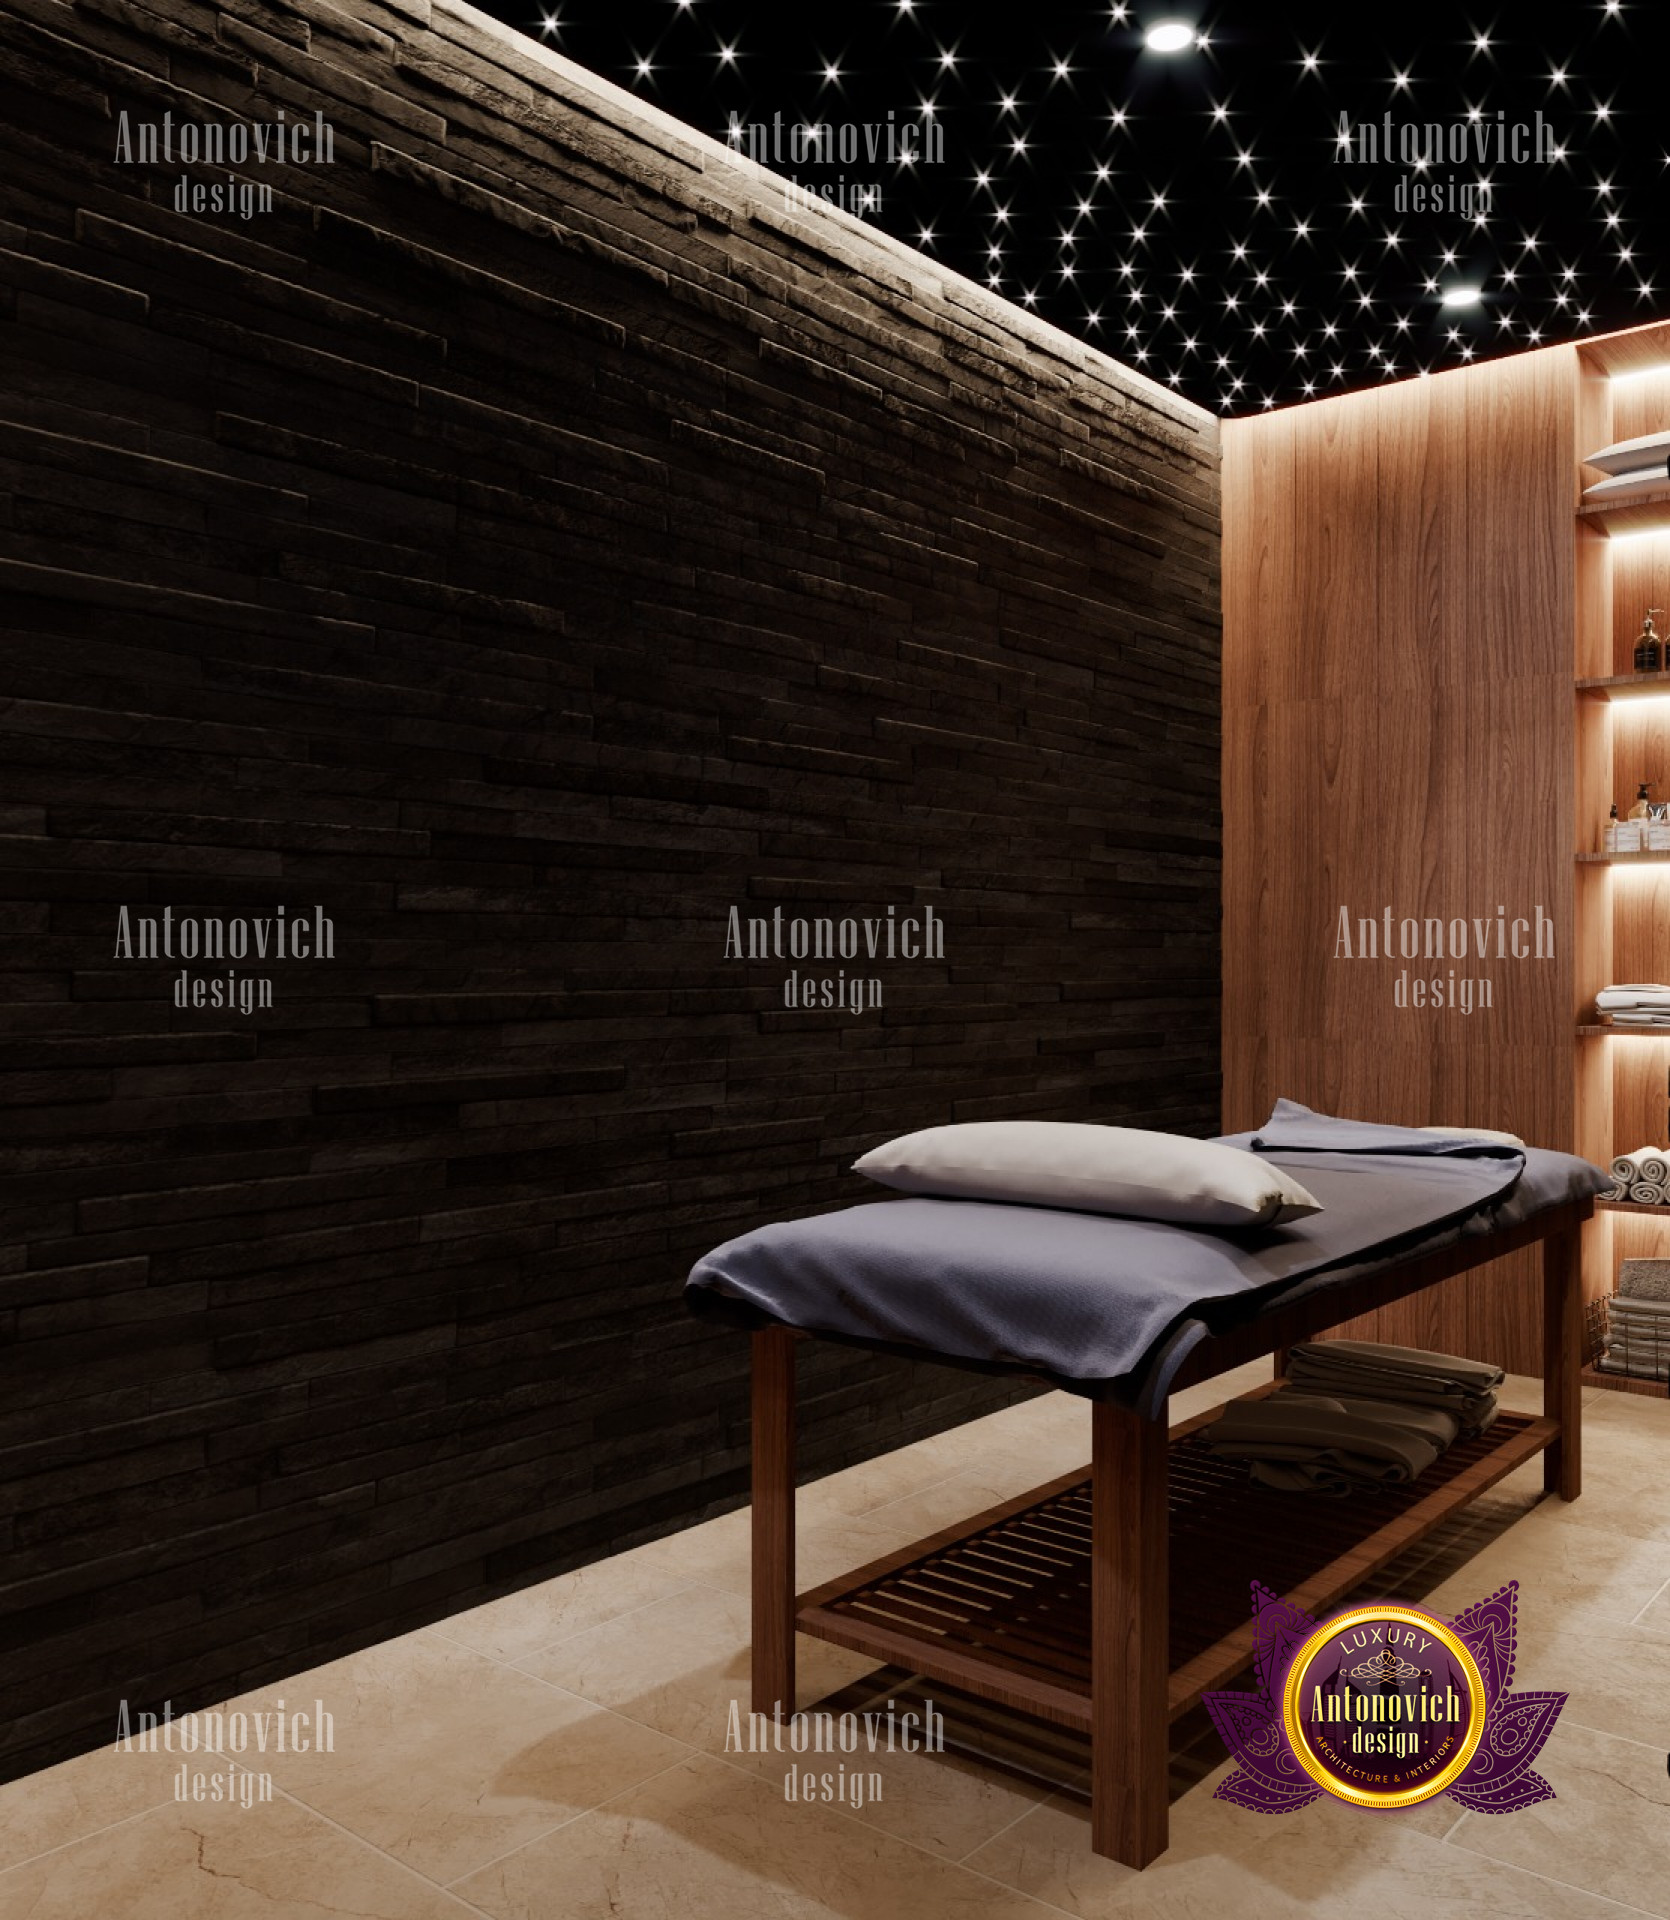 Luxury Spa Decor  Spa interior design, Spa relaxation room, Spa room decor